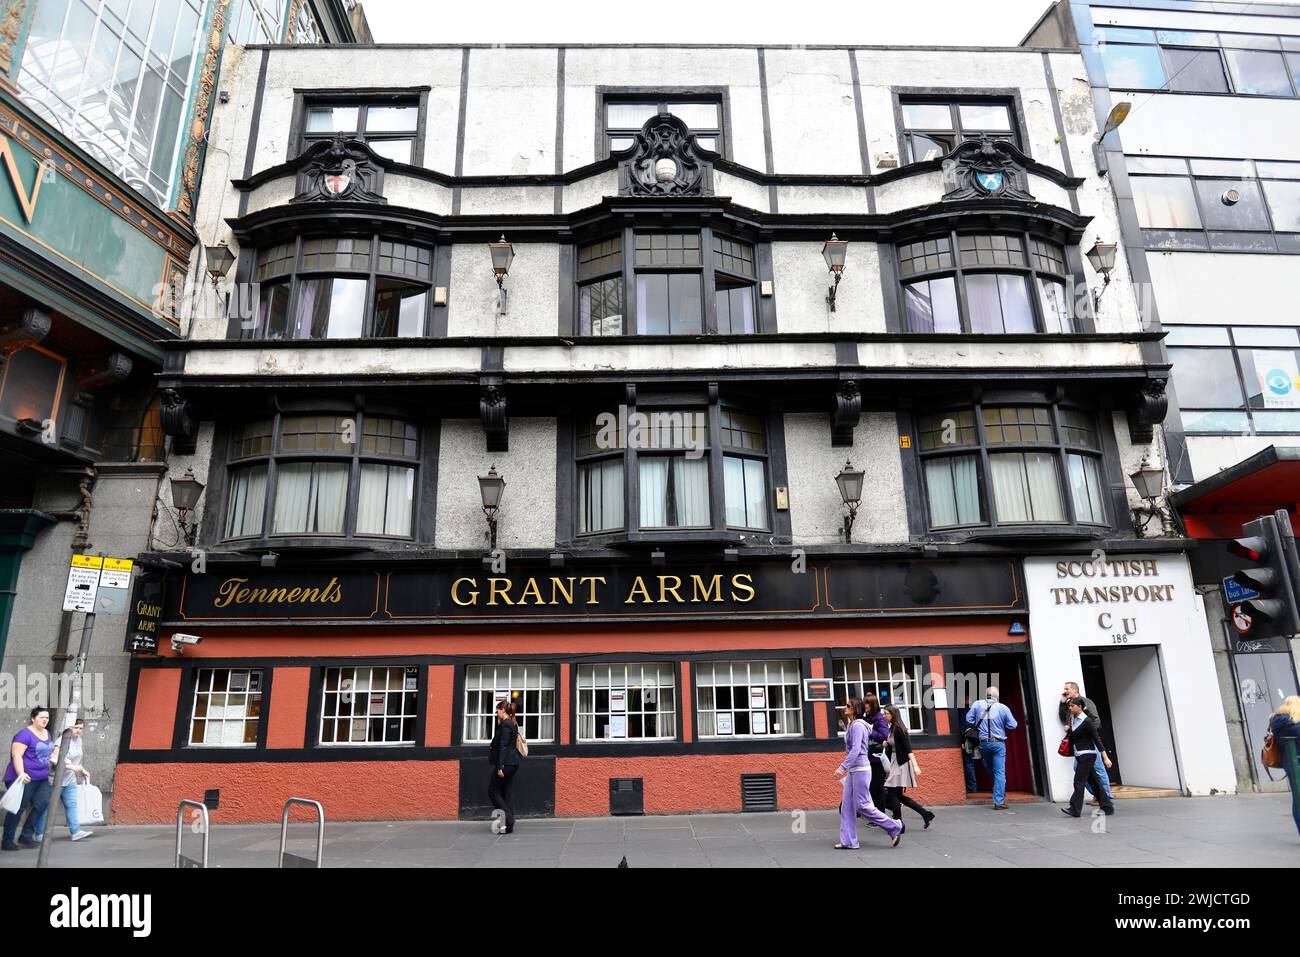 GRANT ARMS, Old Glasgow Pub, Glasgow, Scotland, Great Britain Stock Photo